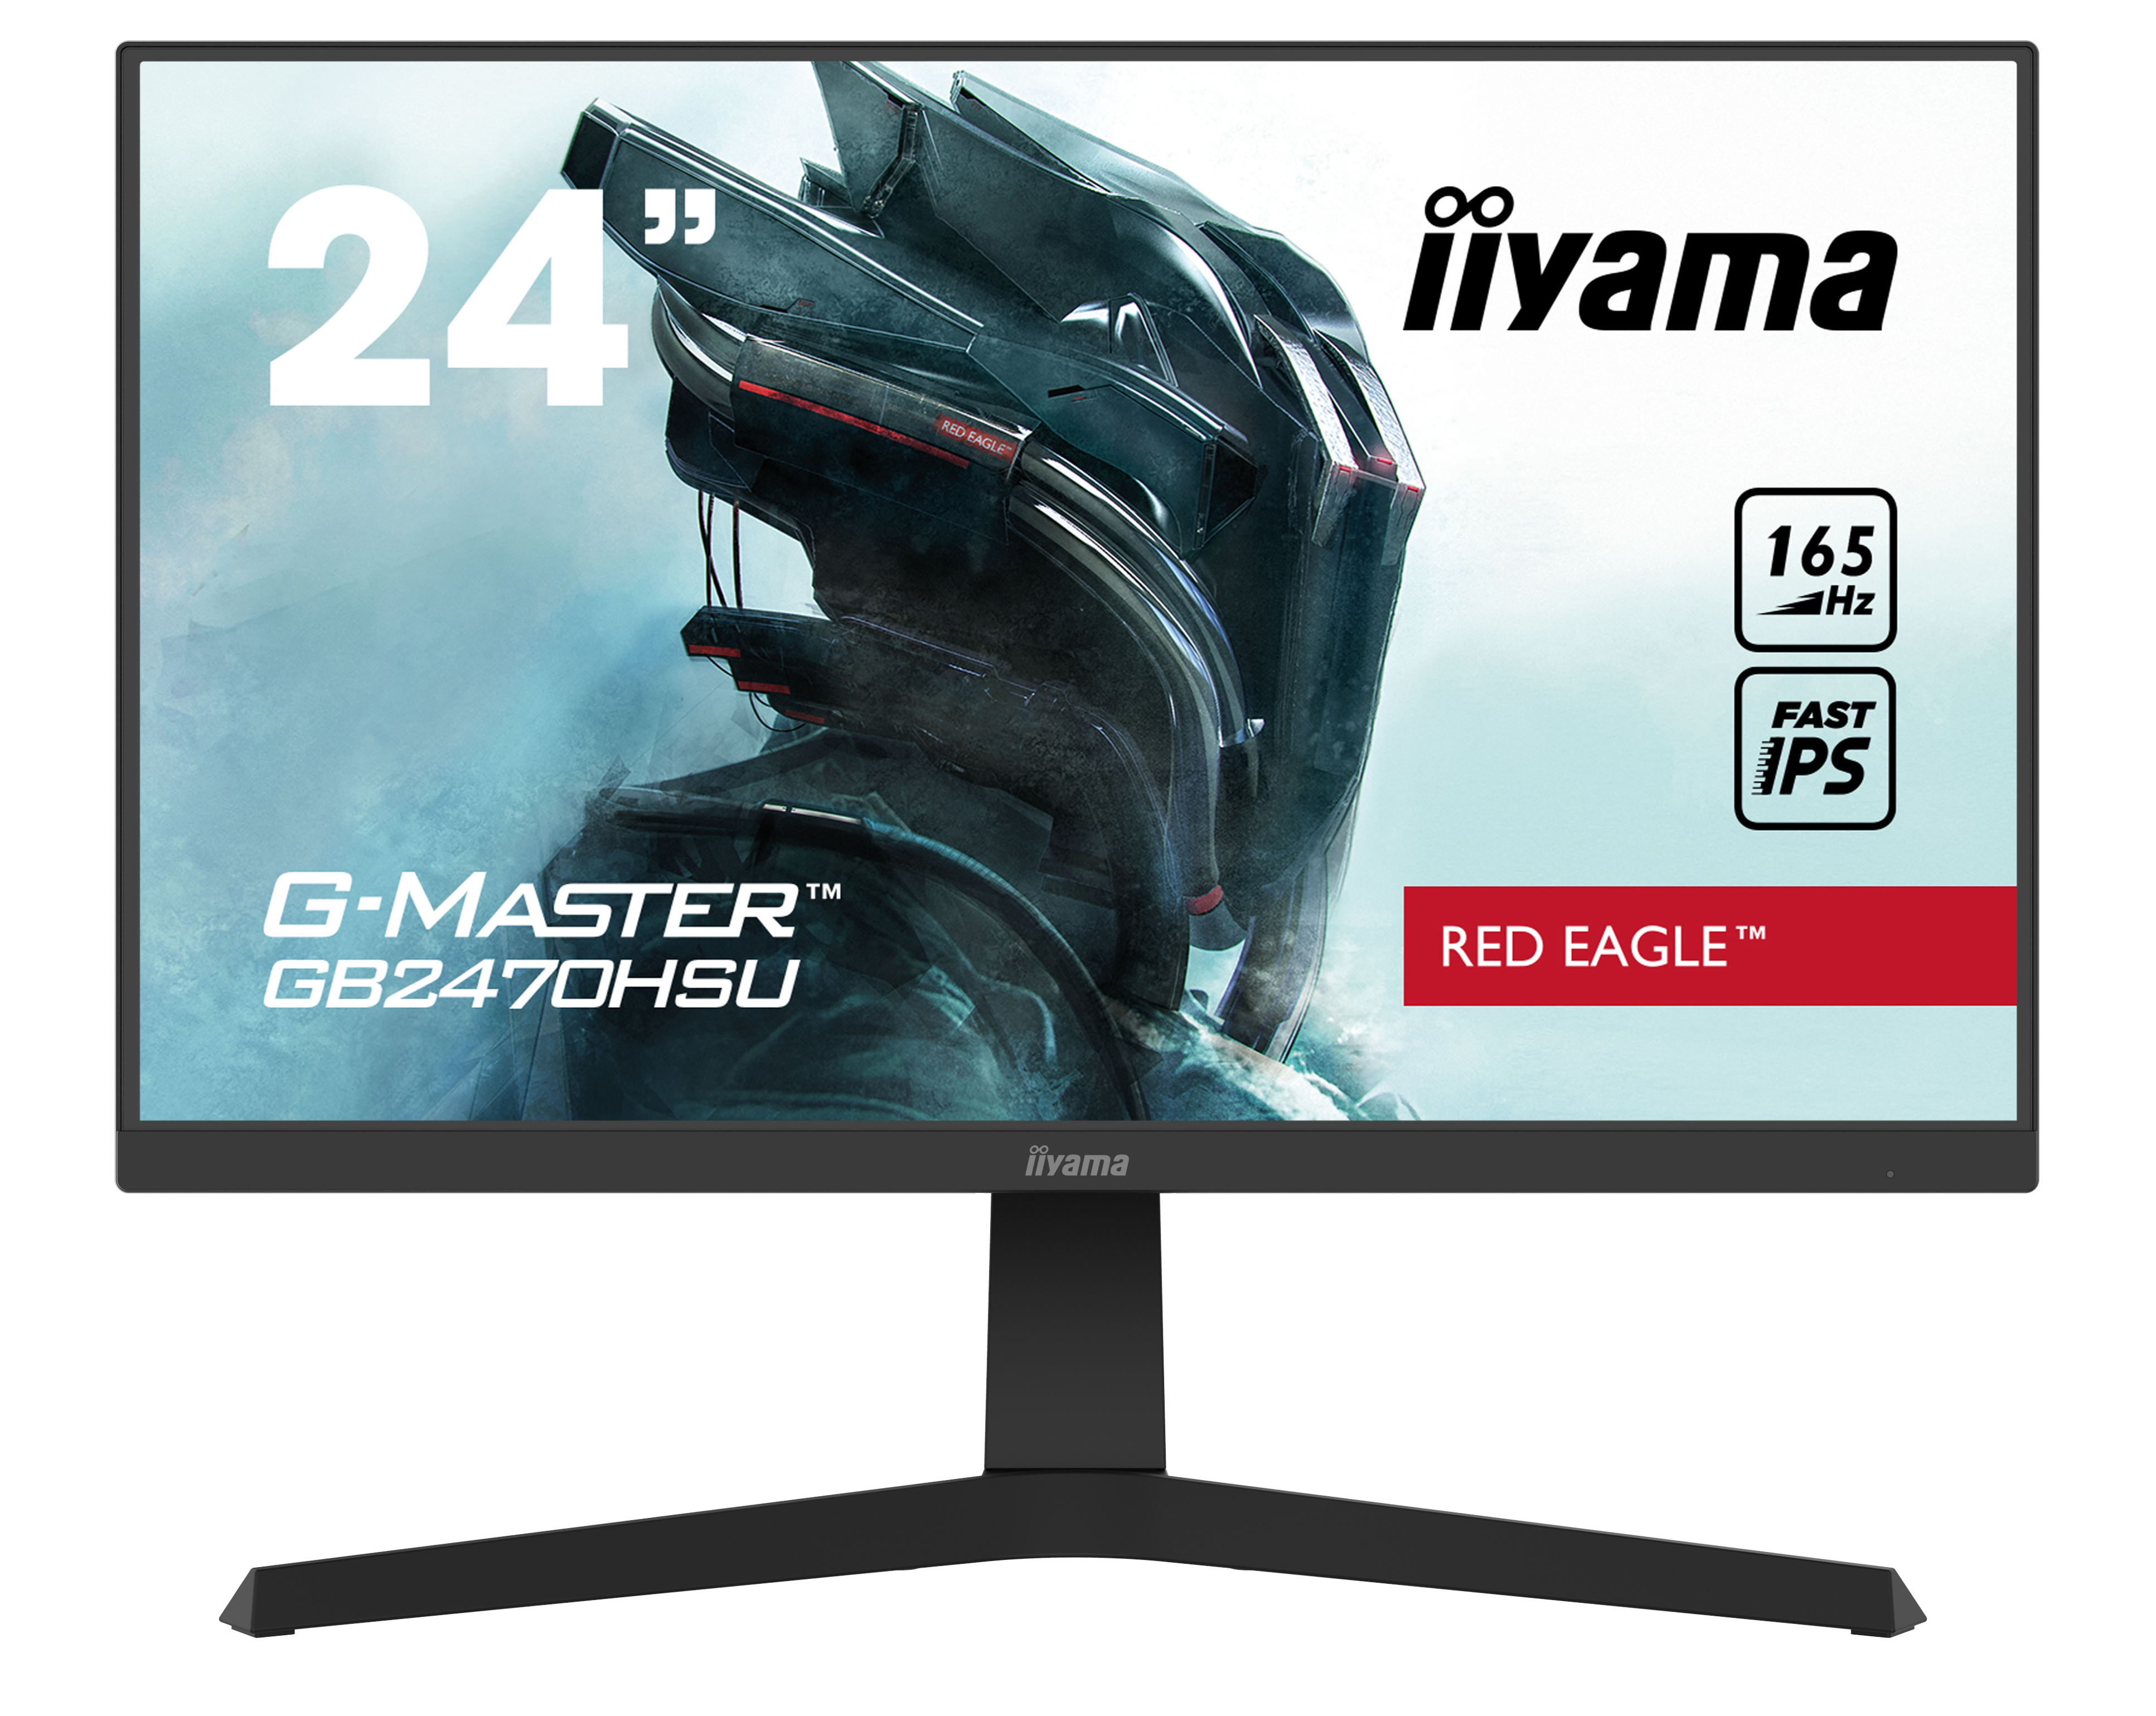 Iiyama G-MASTER GB2470HSU-B1 RED EAGLE | 23,8" | 165Hz  | Gaming Monitor